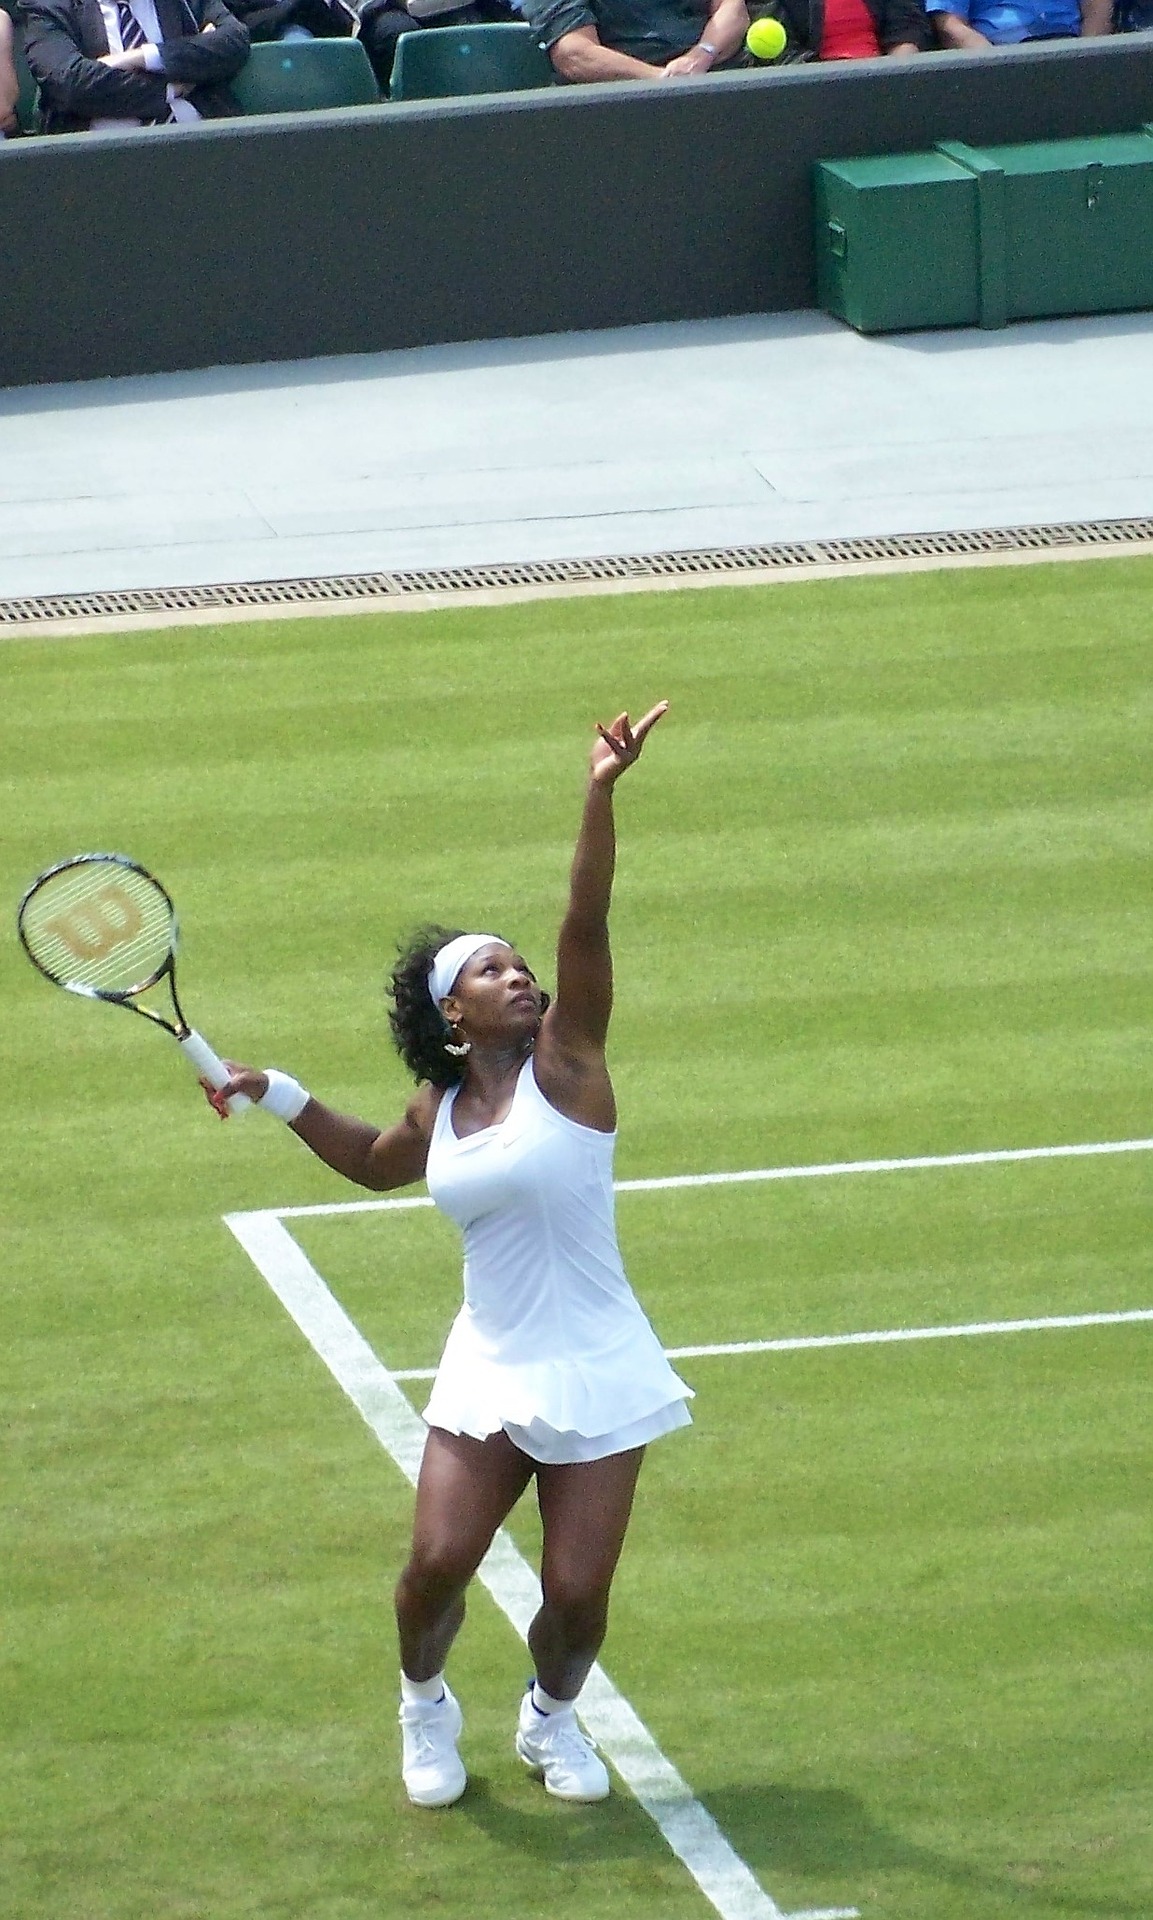 Serena WIlliams playing tennis